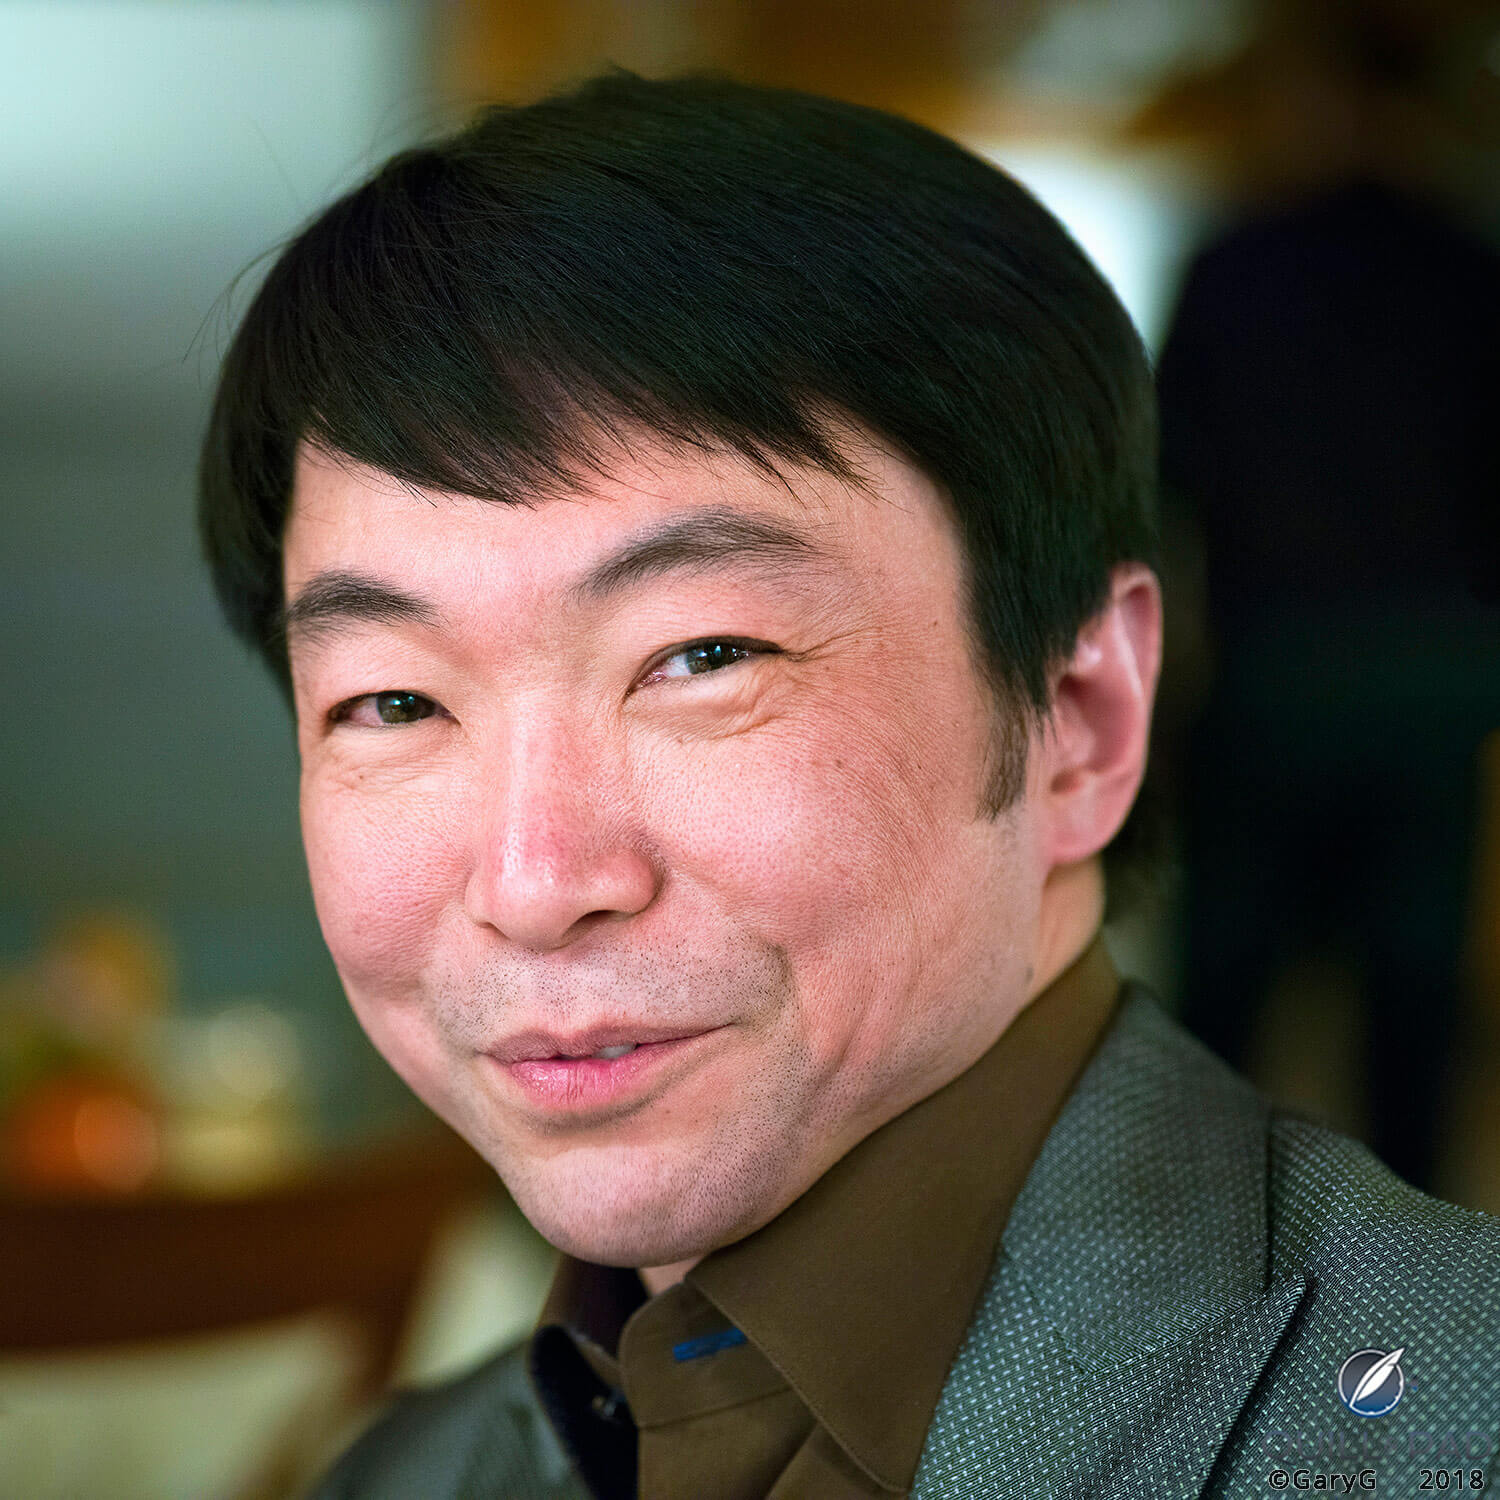 Meet the maker, want the watch: Hajime Asaoka at Baselworld 2018